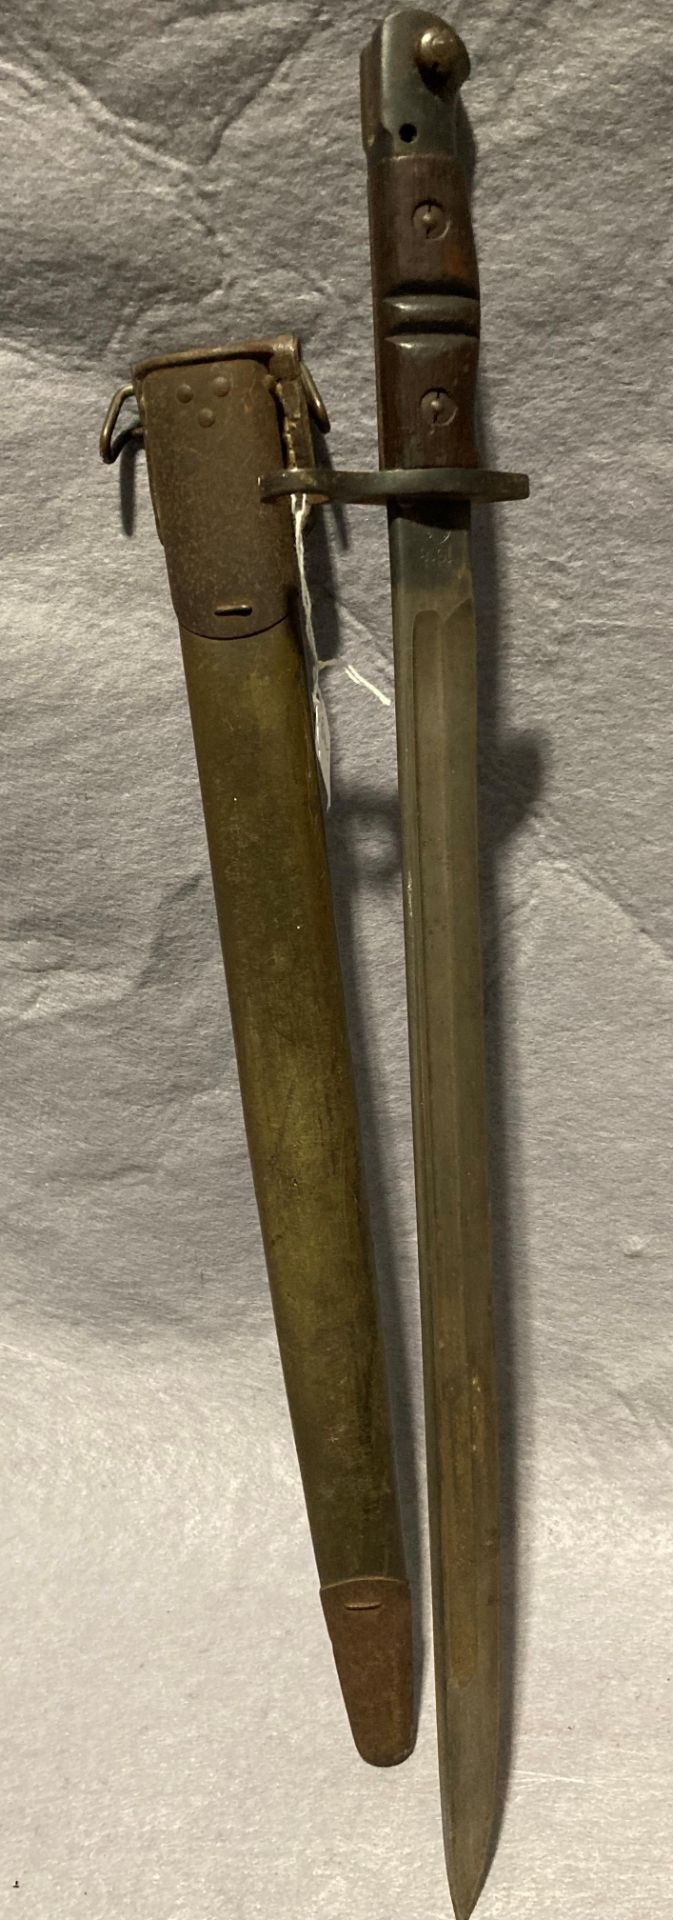 1918 US military Remington bayonet with original sheath, blade 32. - Image 3 of 6